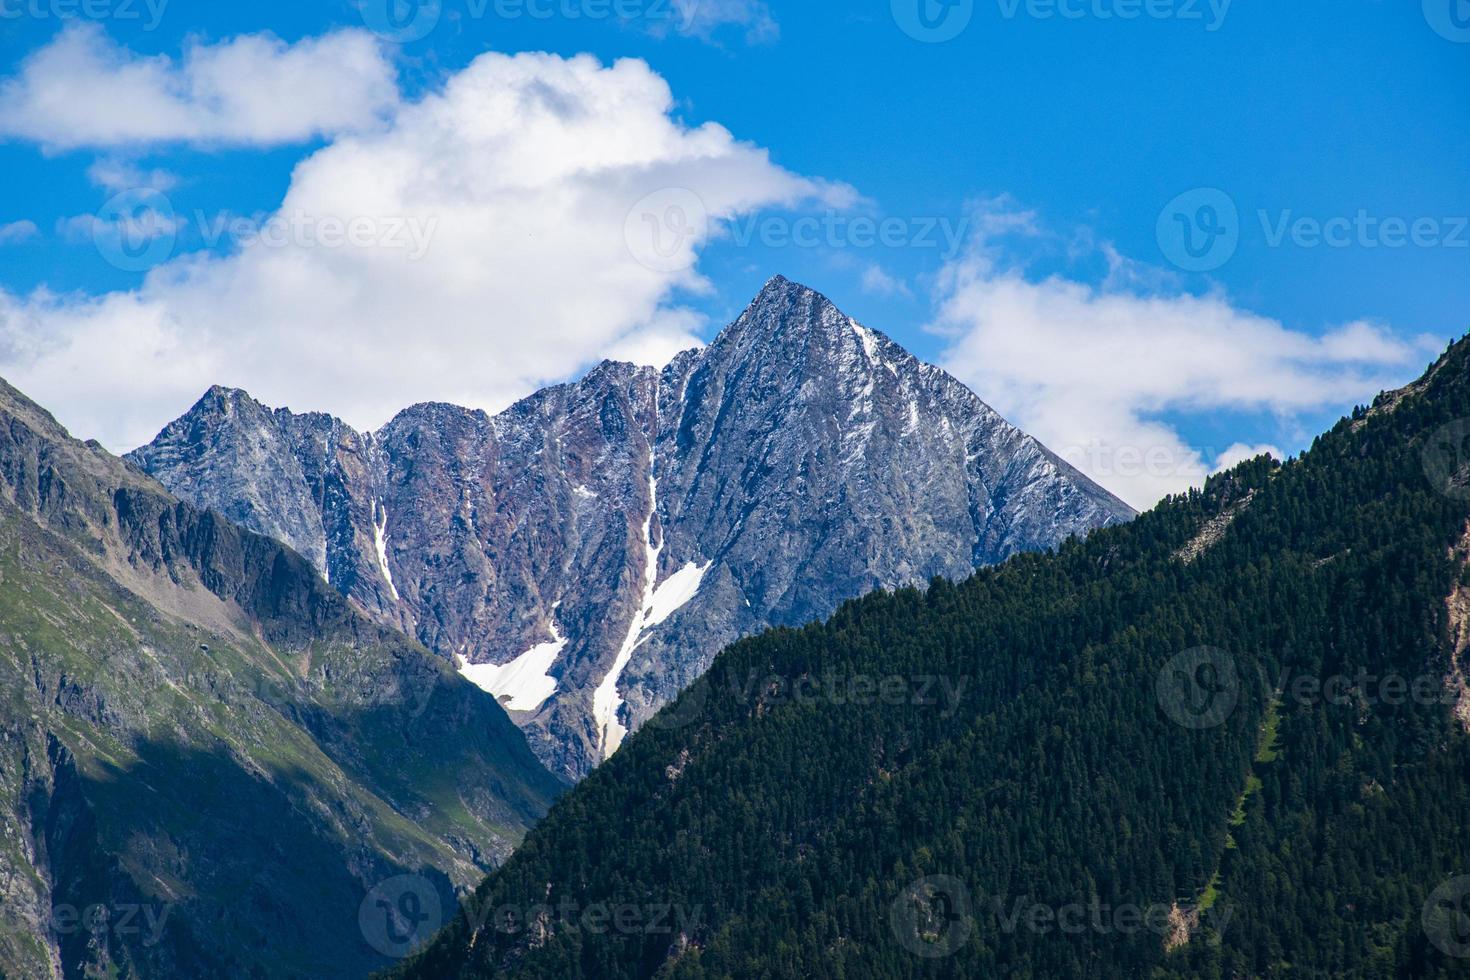 Alpine peaks of south Tyrol photo